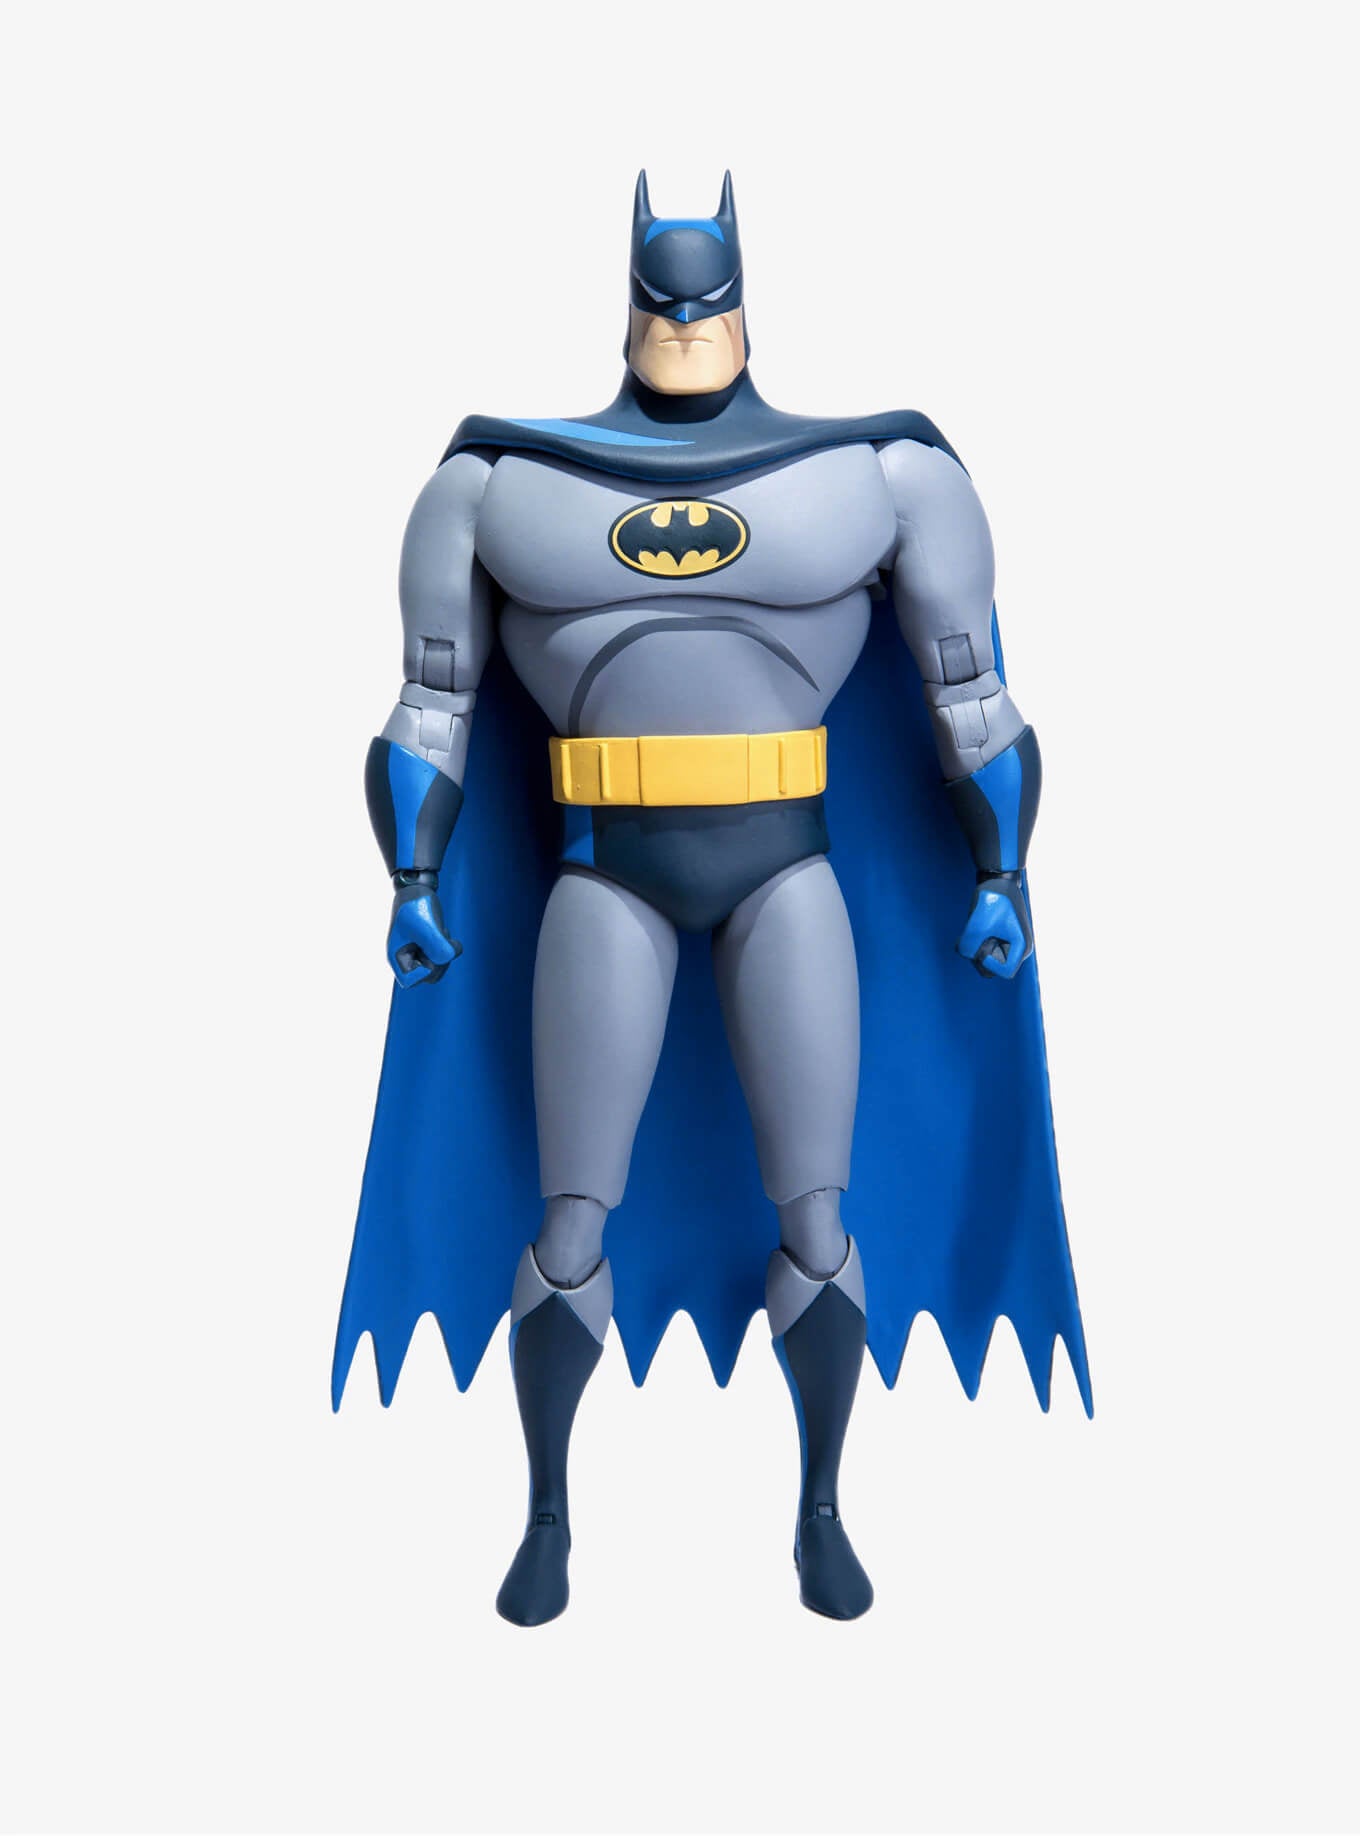 Batman: The Animated Series 1:6 Scale Figure